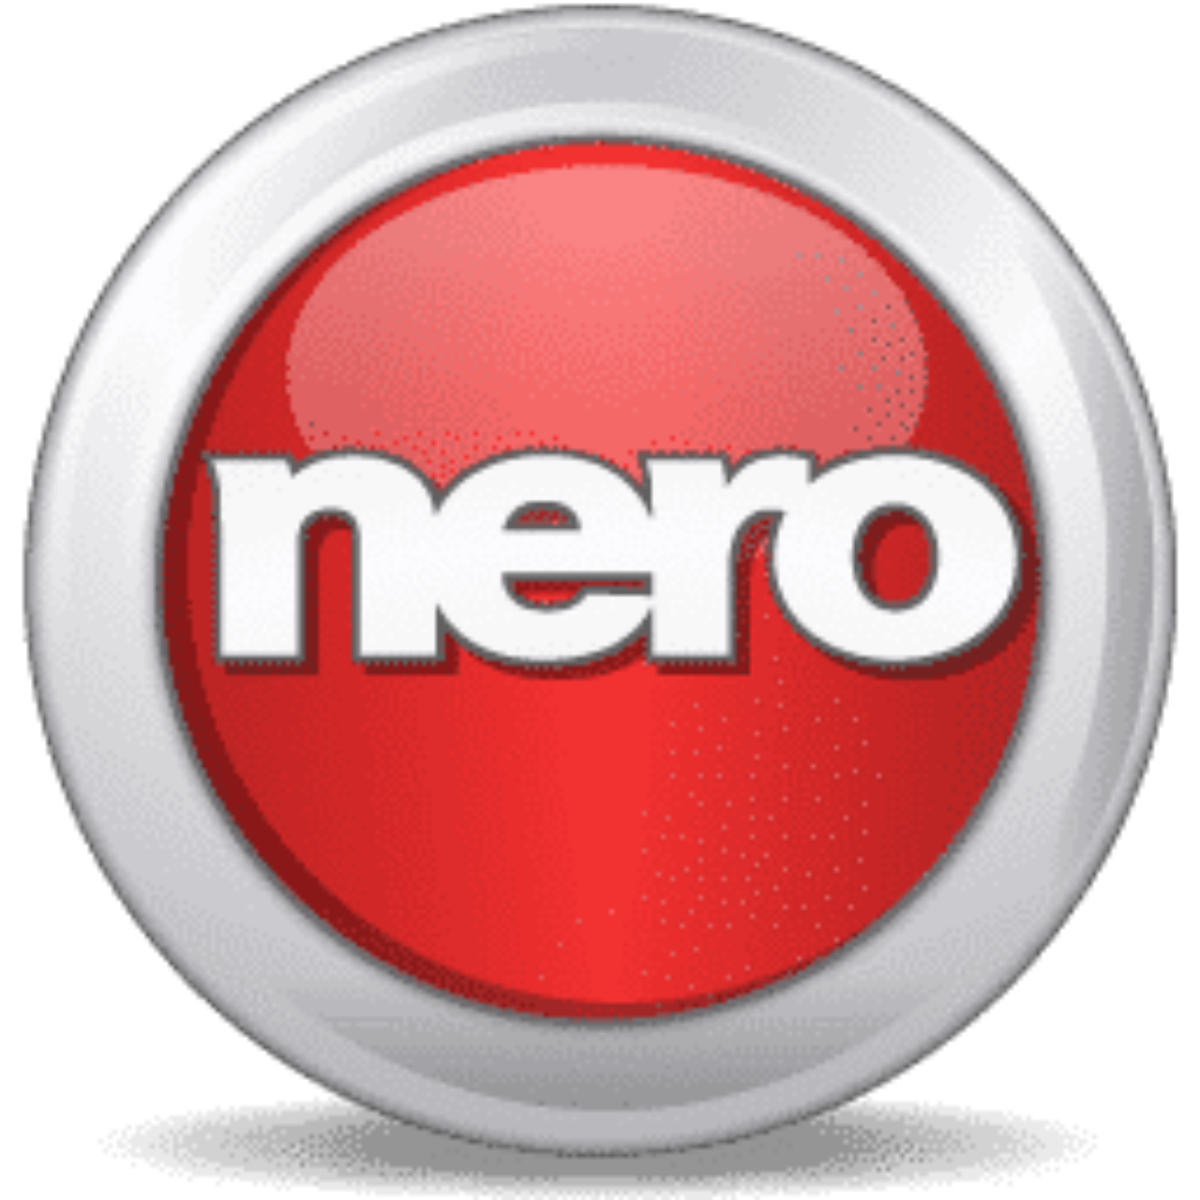 Nero Startsmart 9 Free Download Full Version For Windows 7 32Bit